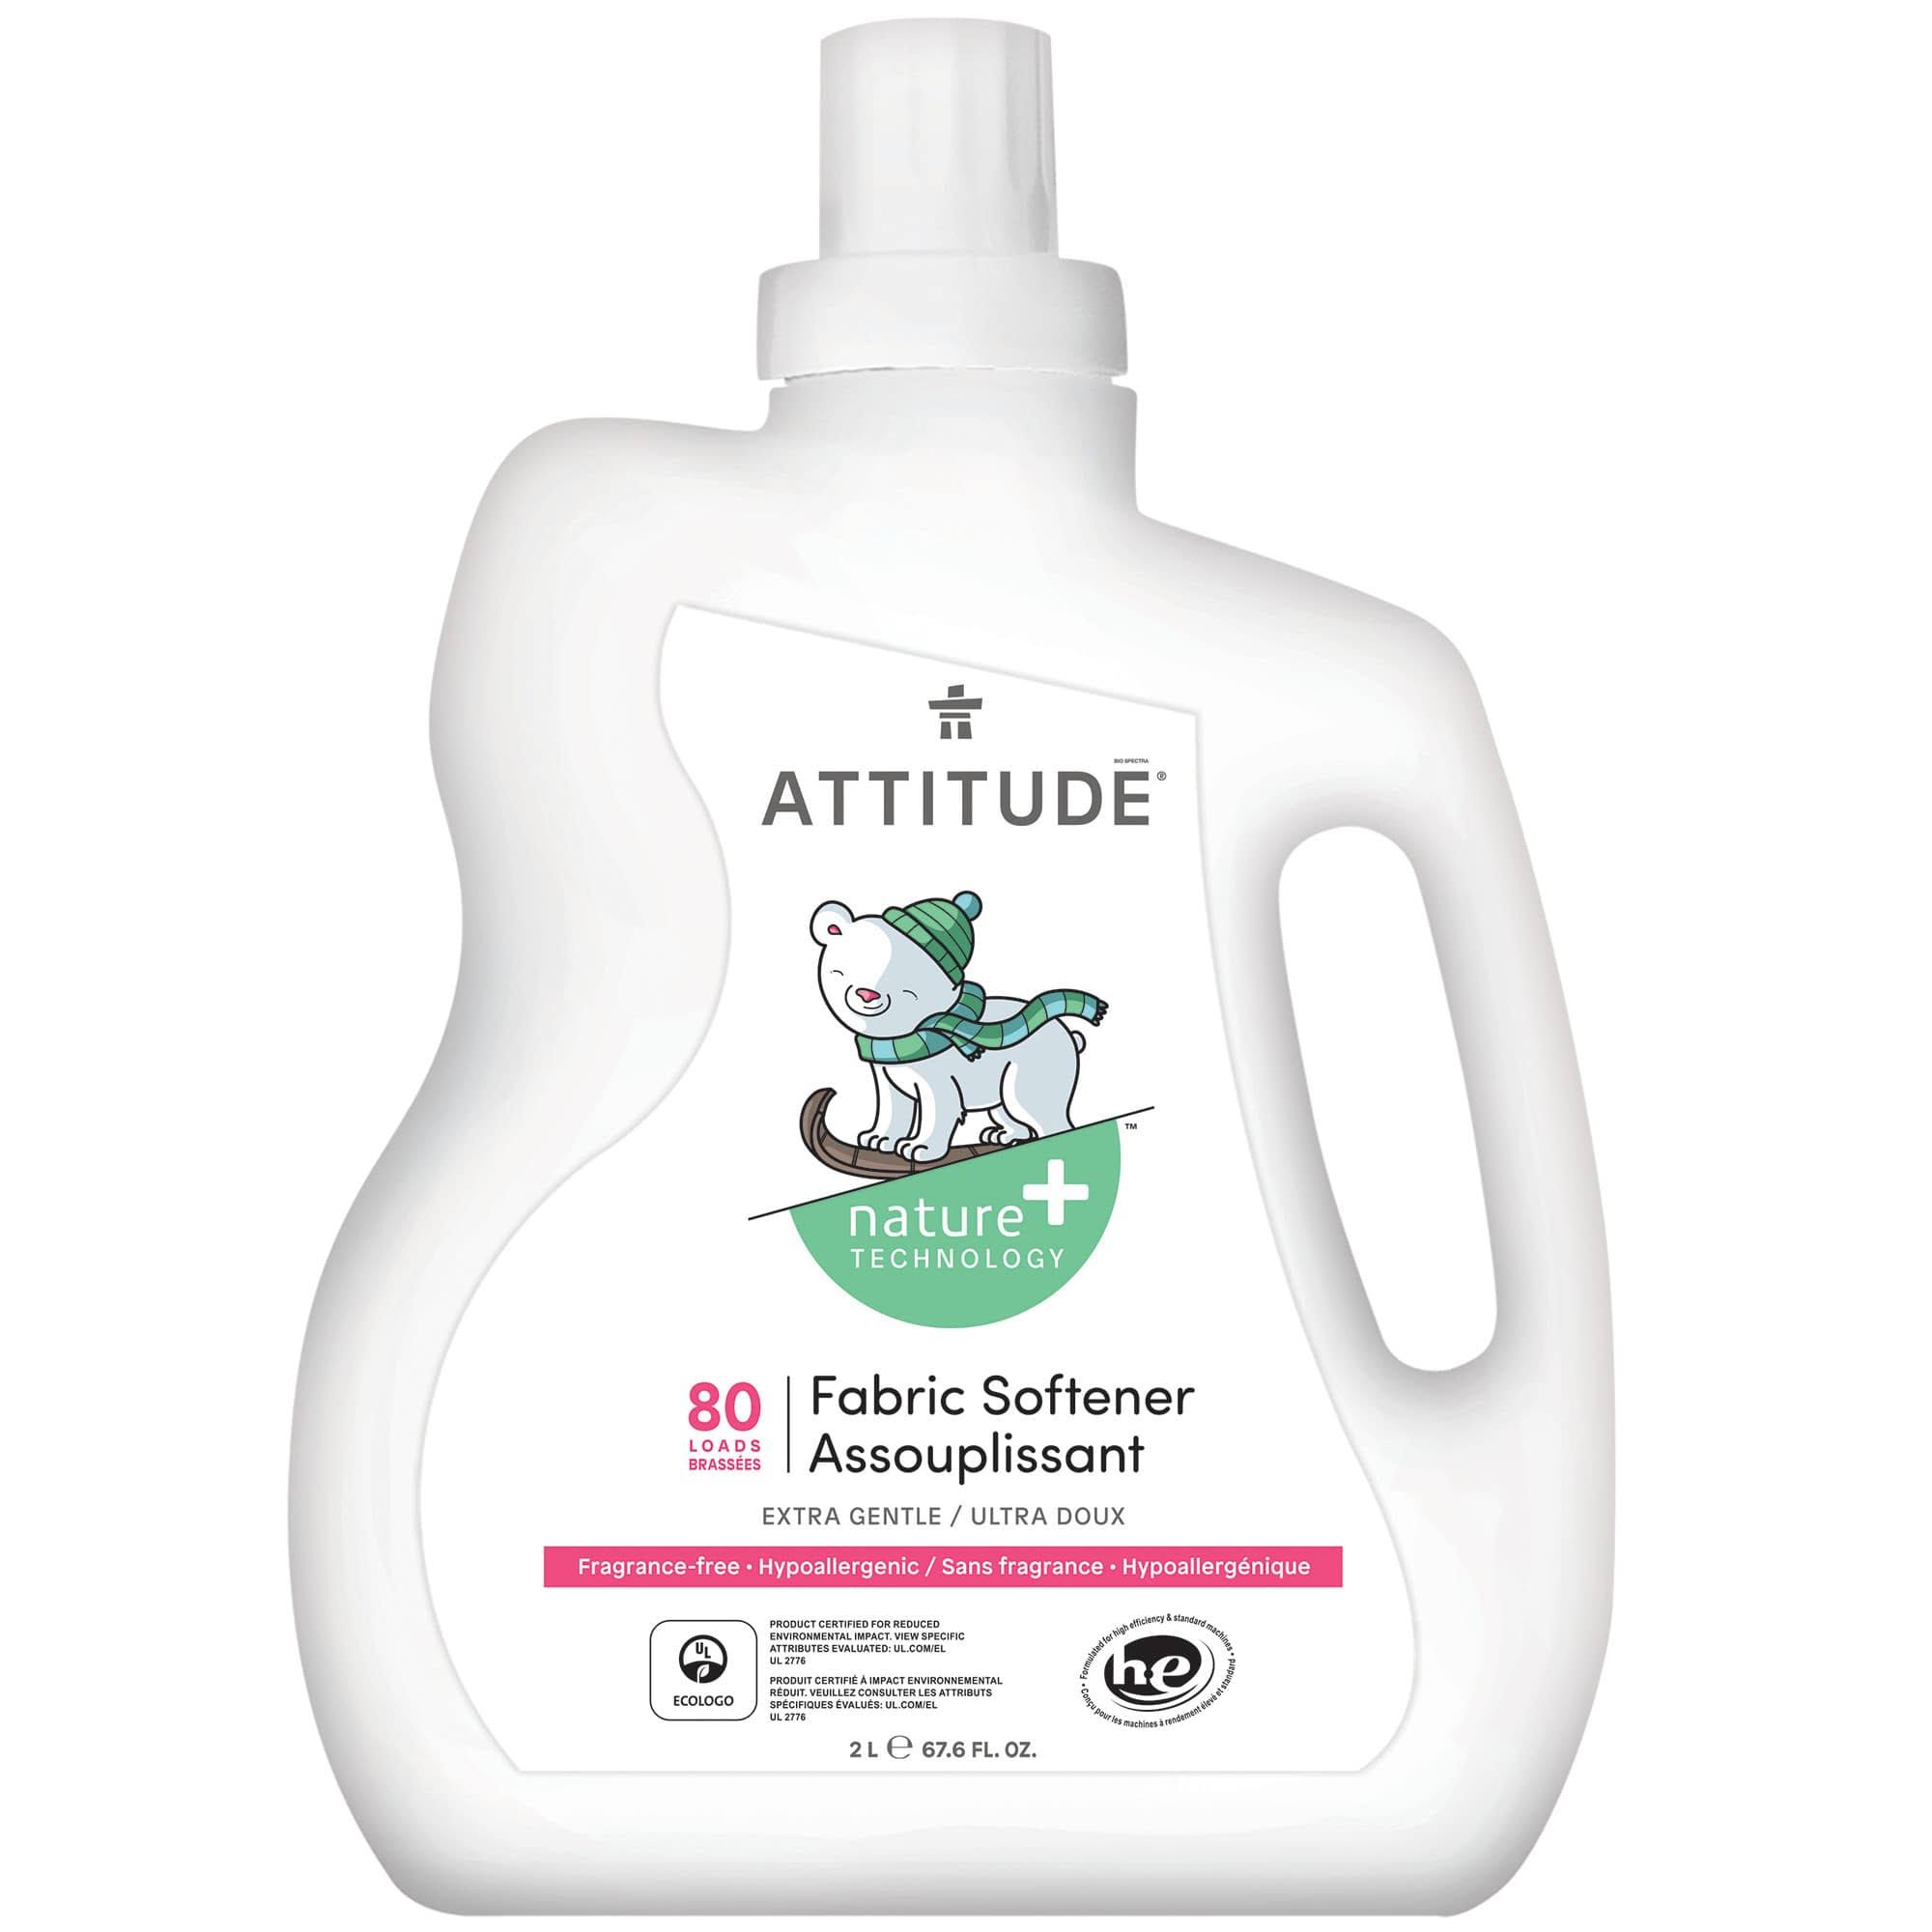 ATTITUDE Fabric Softener Fragrance Free (80)